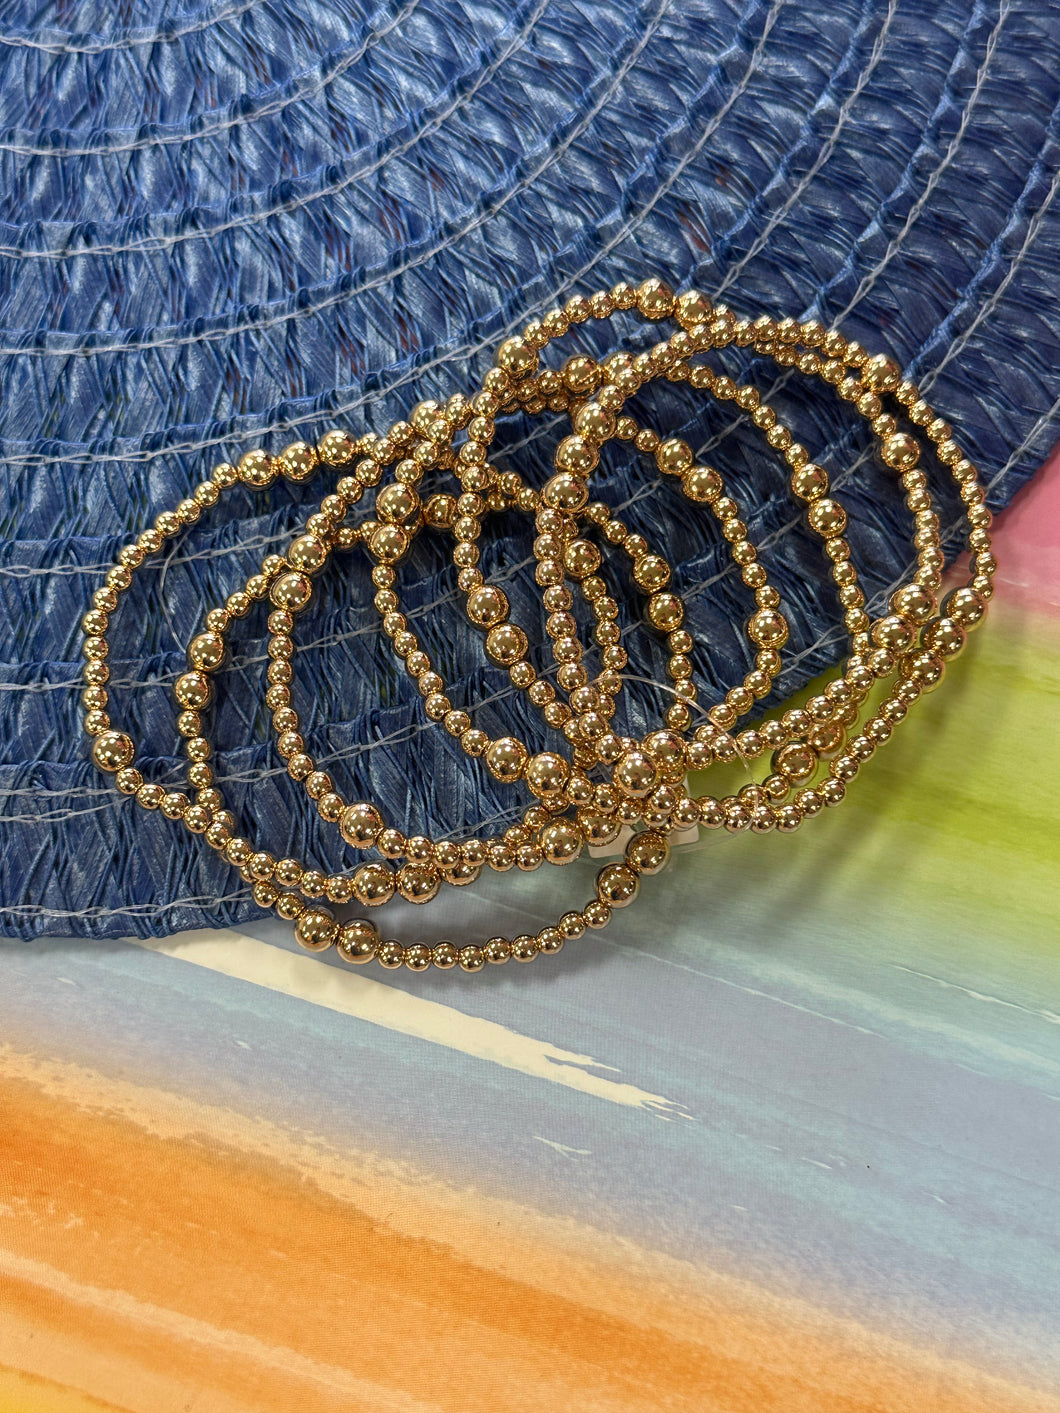 Water Resistant Gold Bead Bracelets